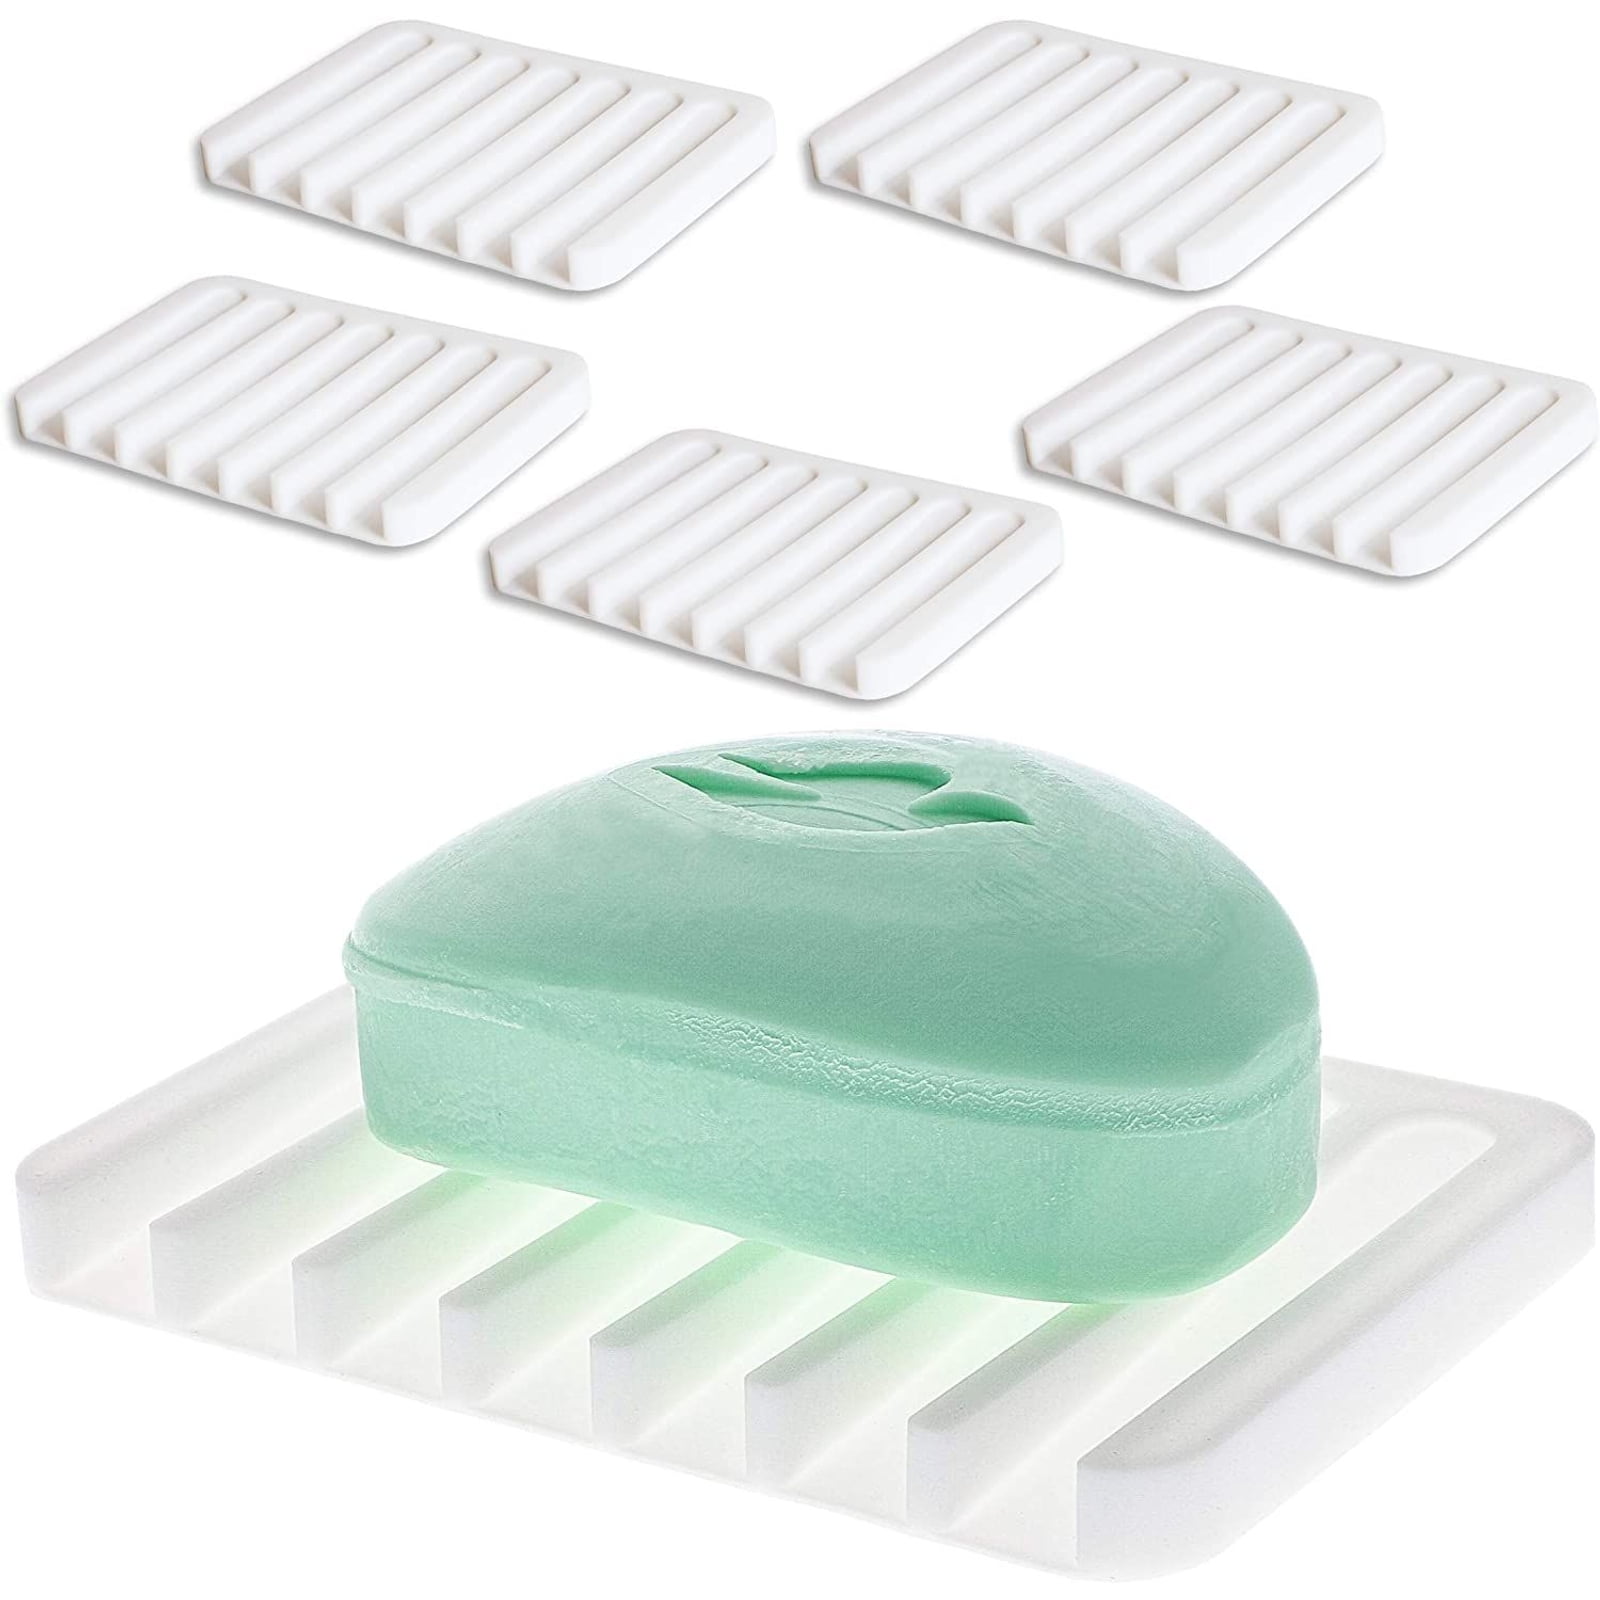 Clip On Silicone Bathroom Soap Dish Plate Holder Tray Storage Case Drai NHF 